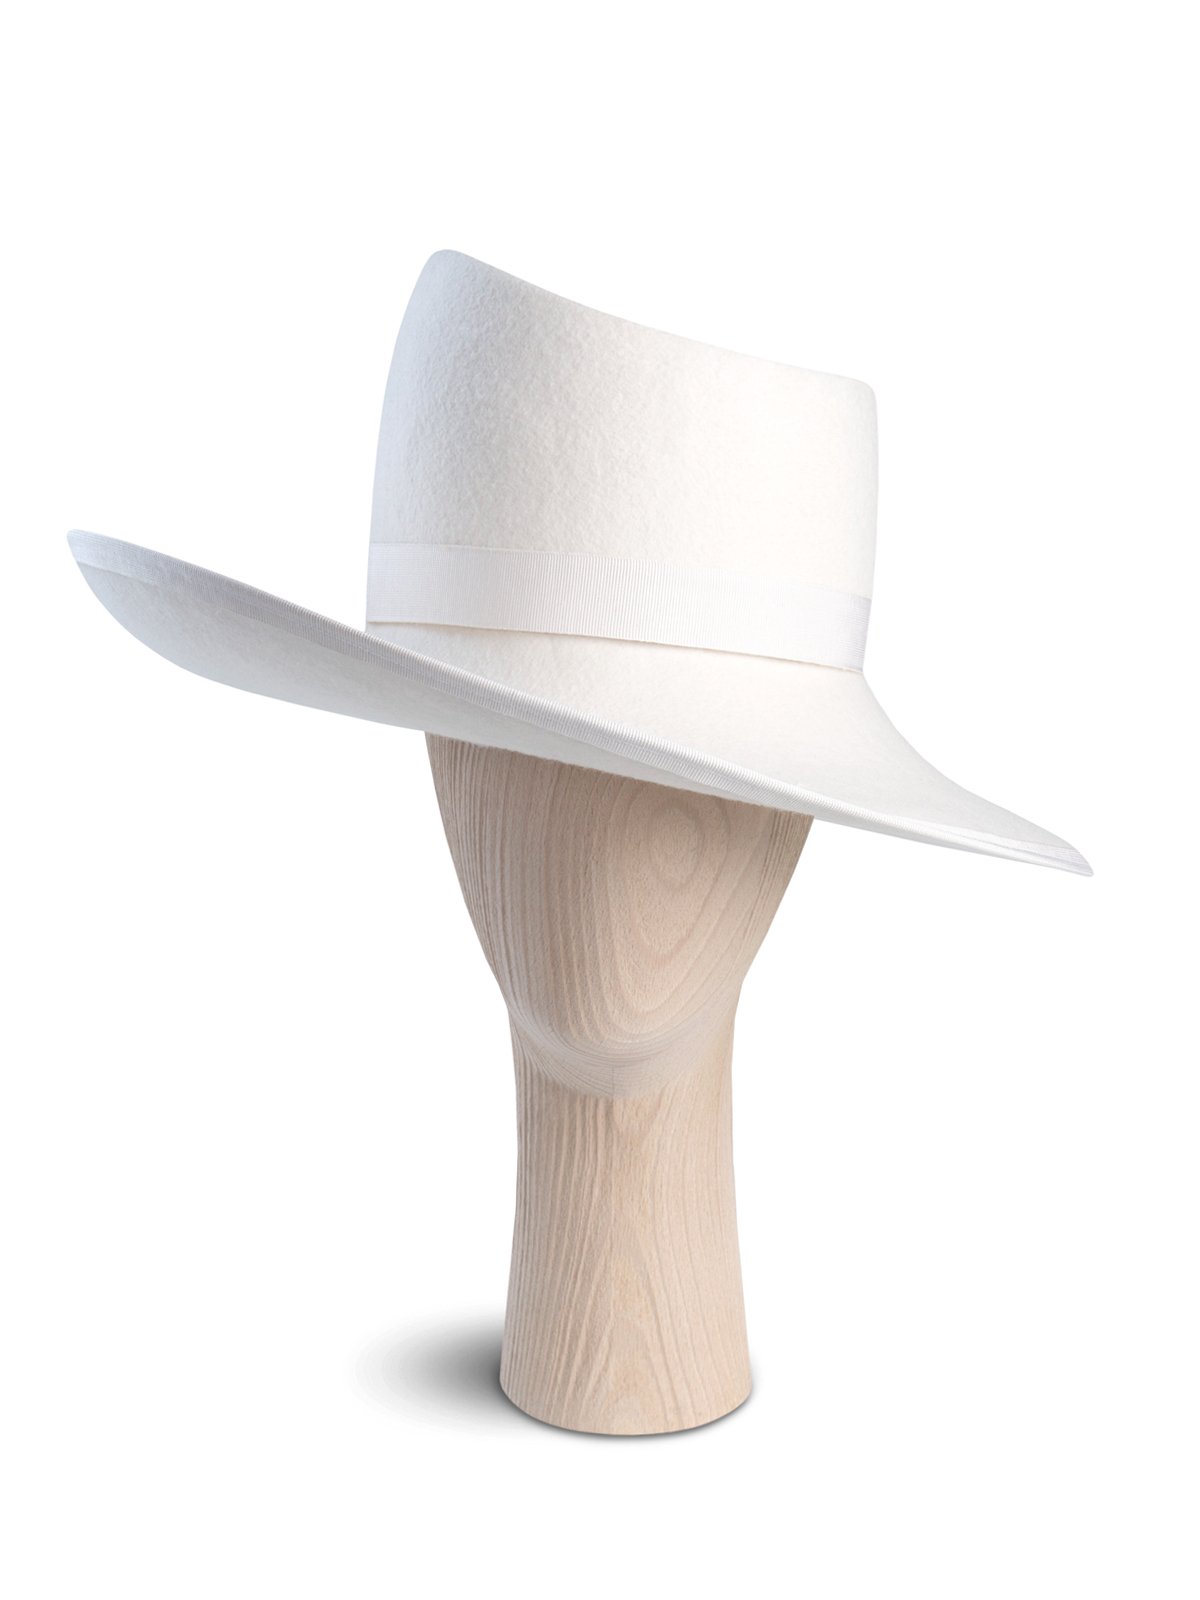  Nina White Hat